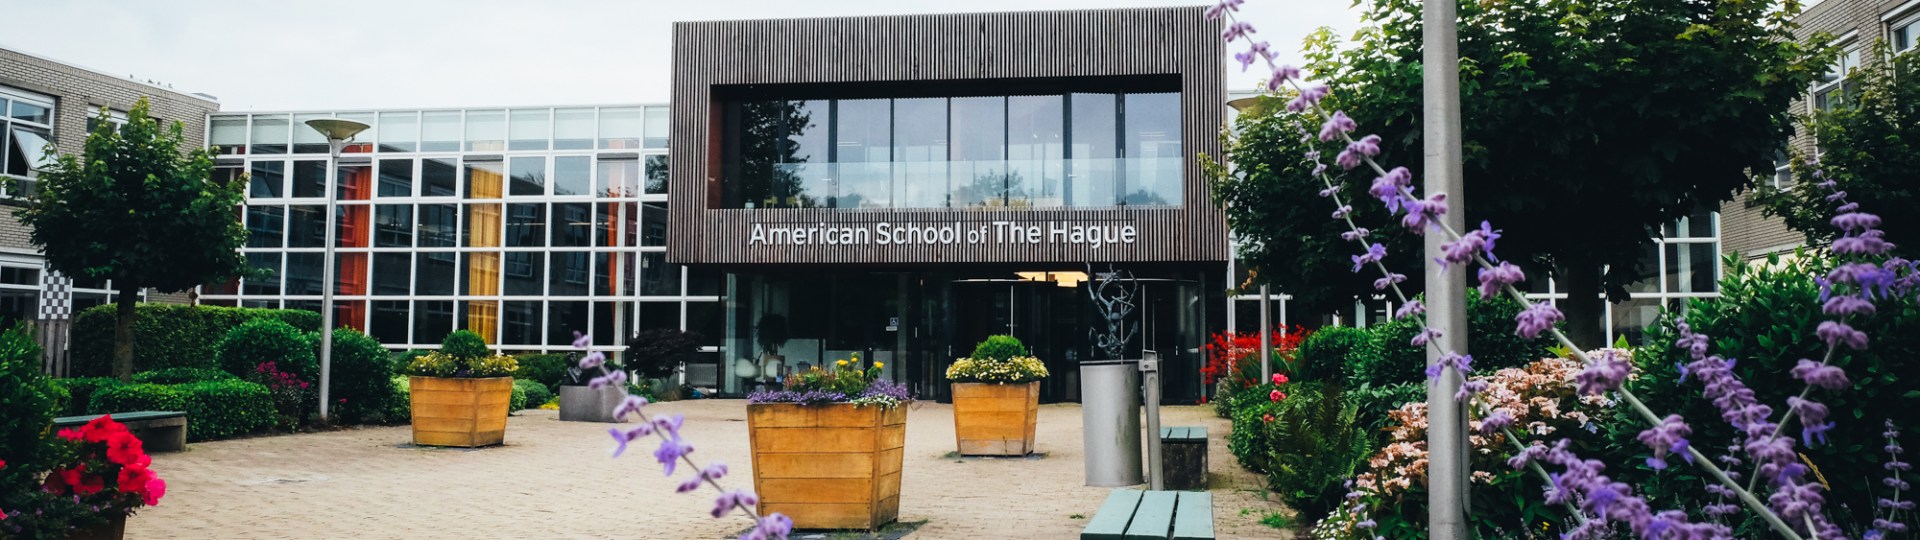 American School of The Hague High School